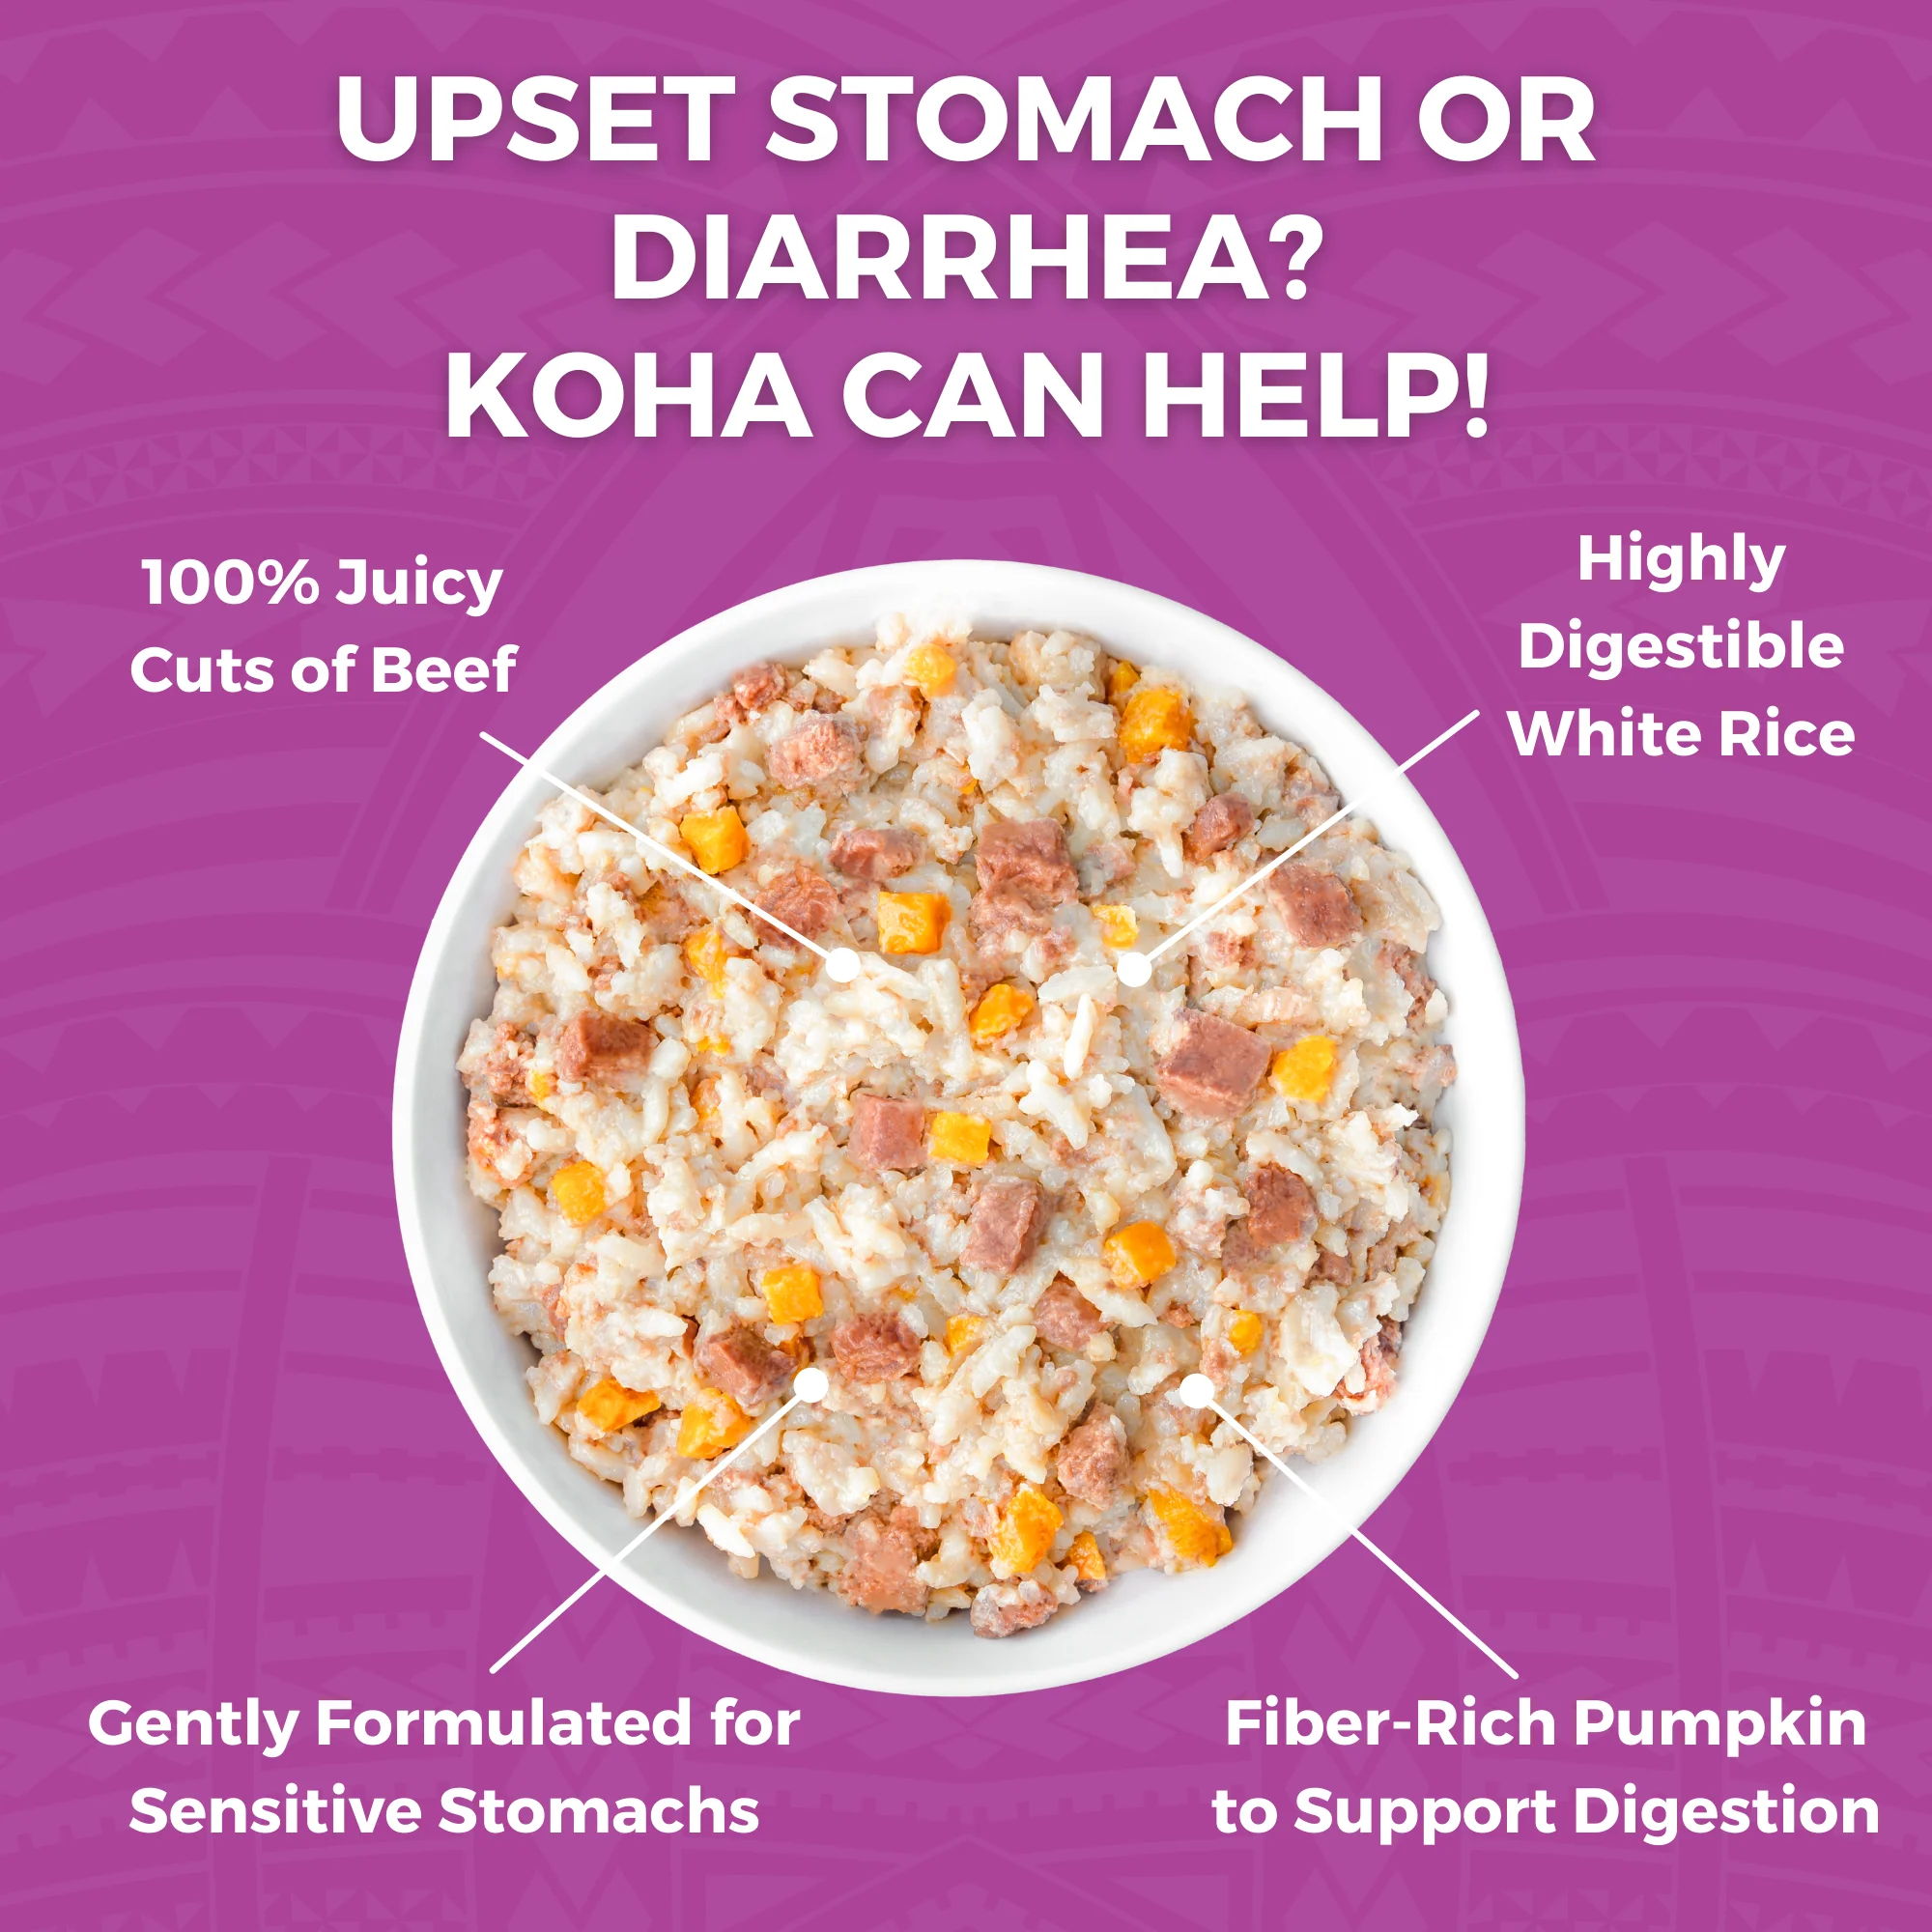 Koha Limited Ingredient Bland Diet Beef & Whie Rice Recipe 12.5oz